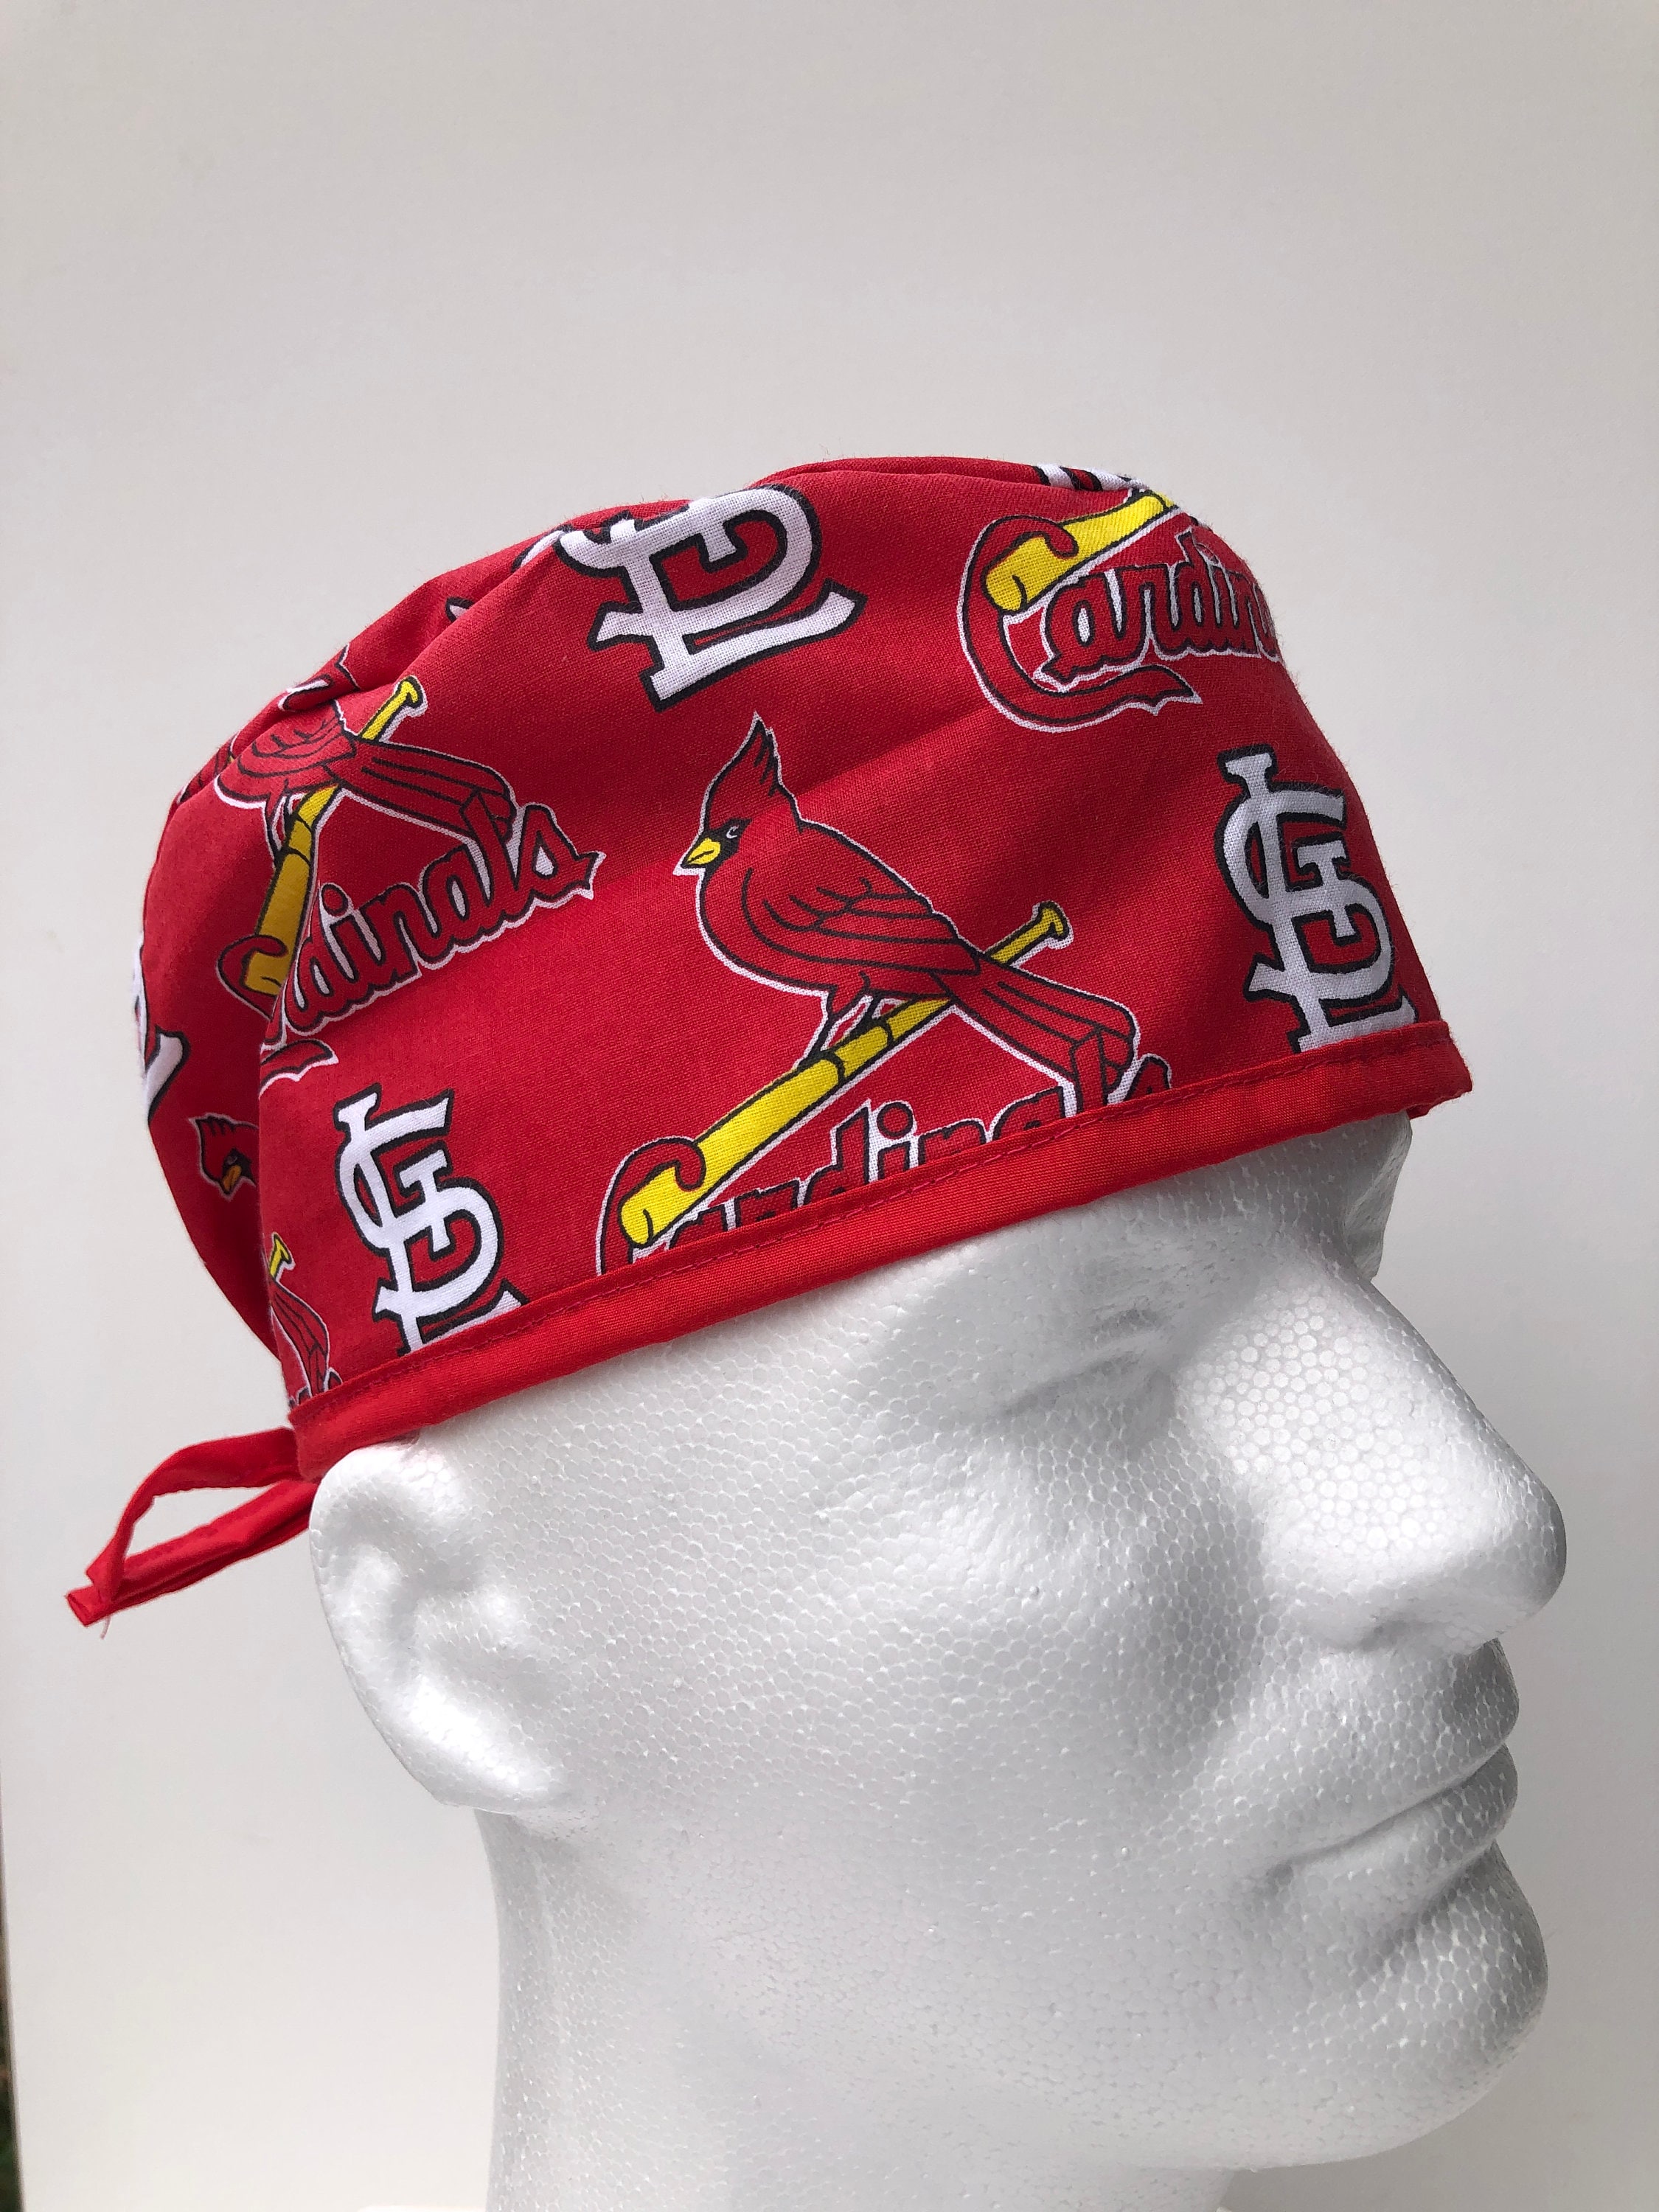 Buy Stl Cardinals Hat Online In India -  India